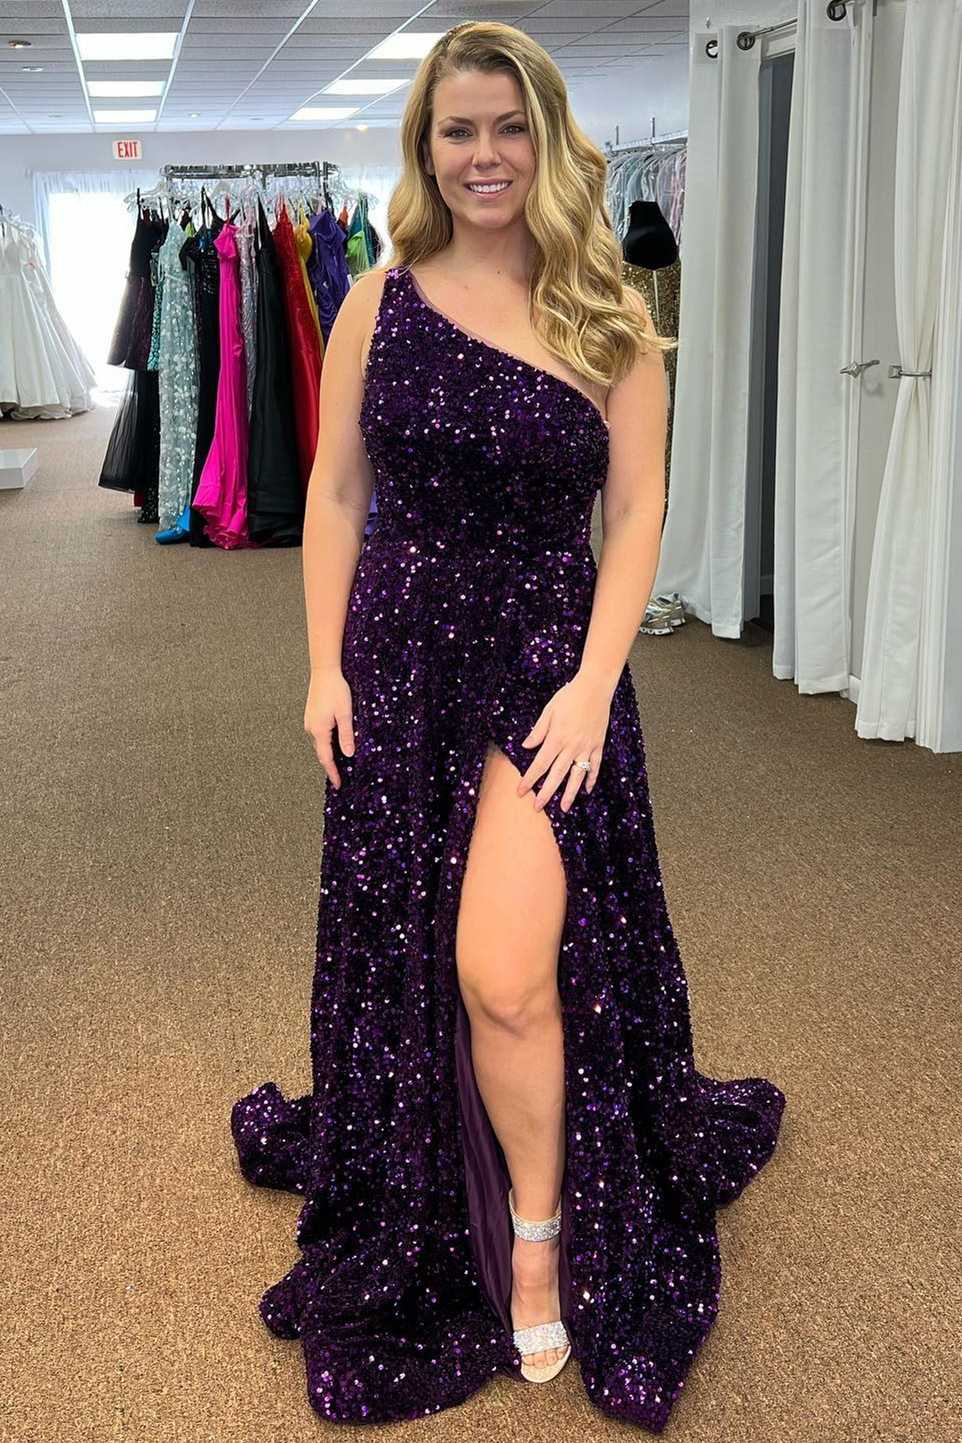 Purple Sequin One-Shoulder Backless A-Line Long Prom Dress